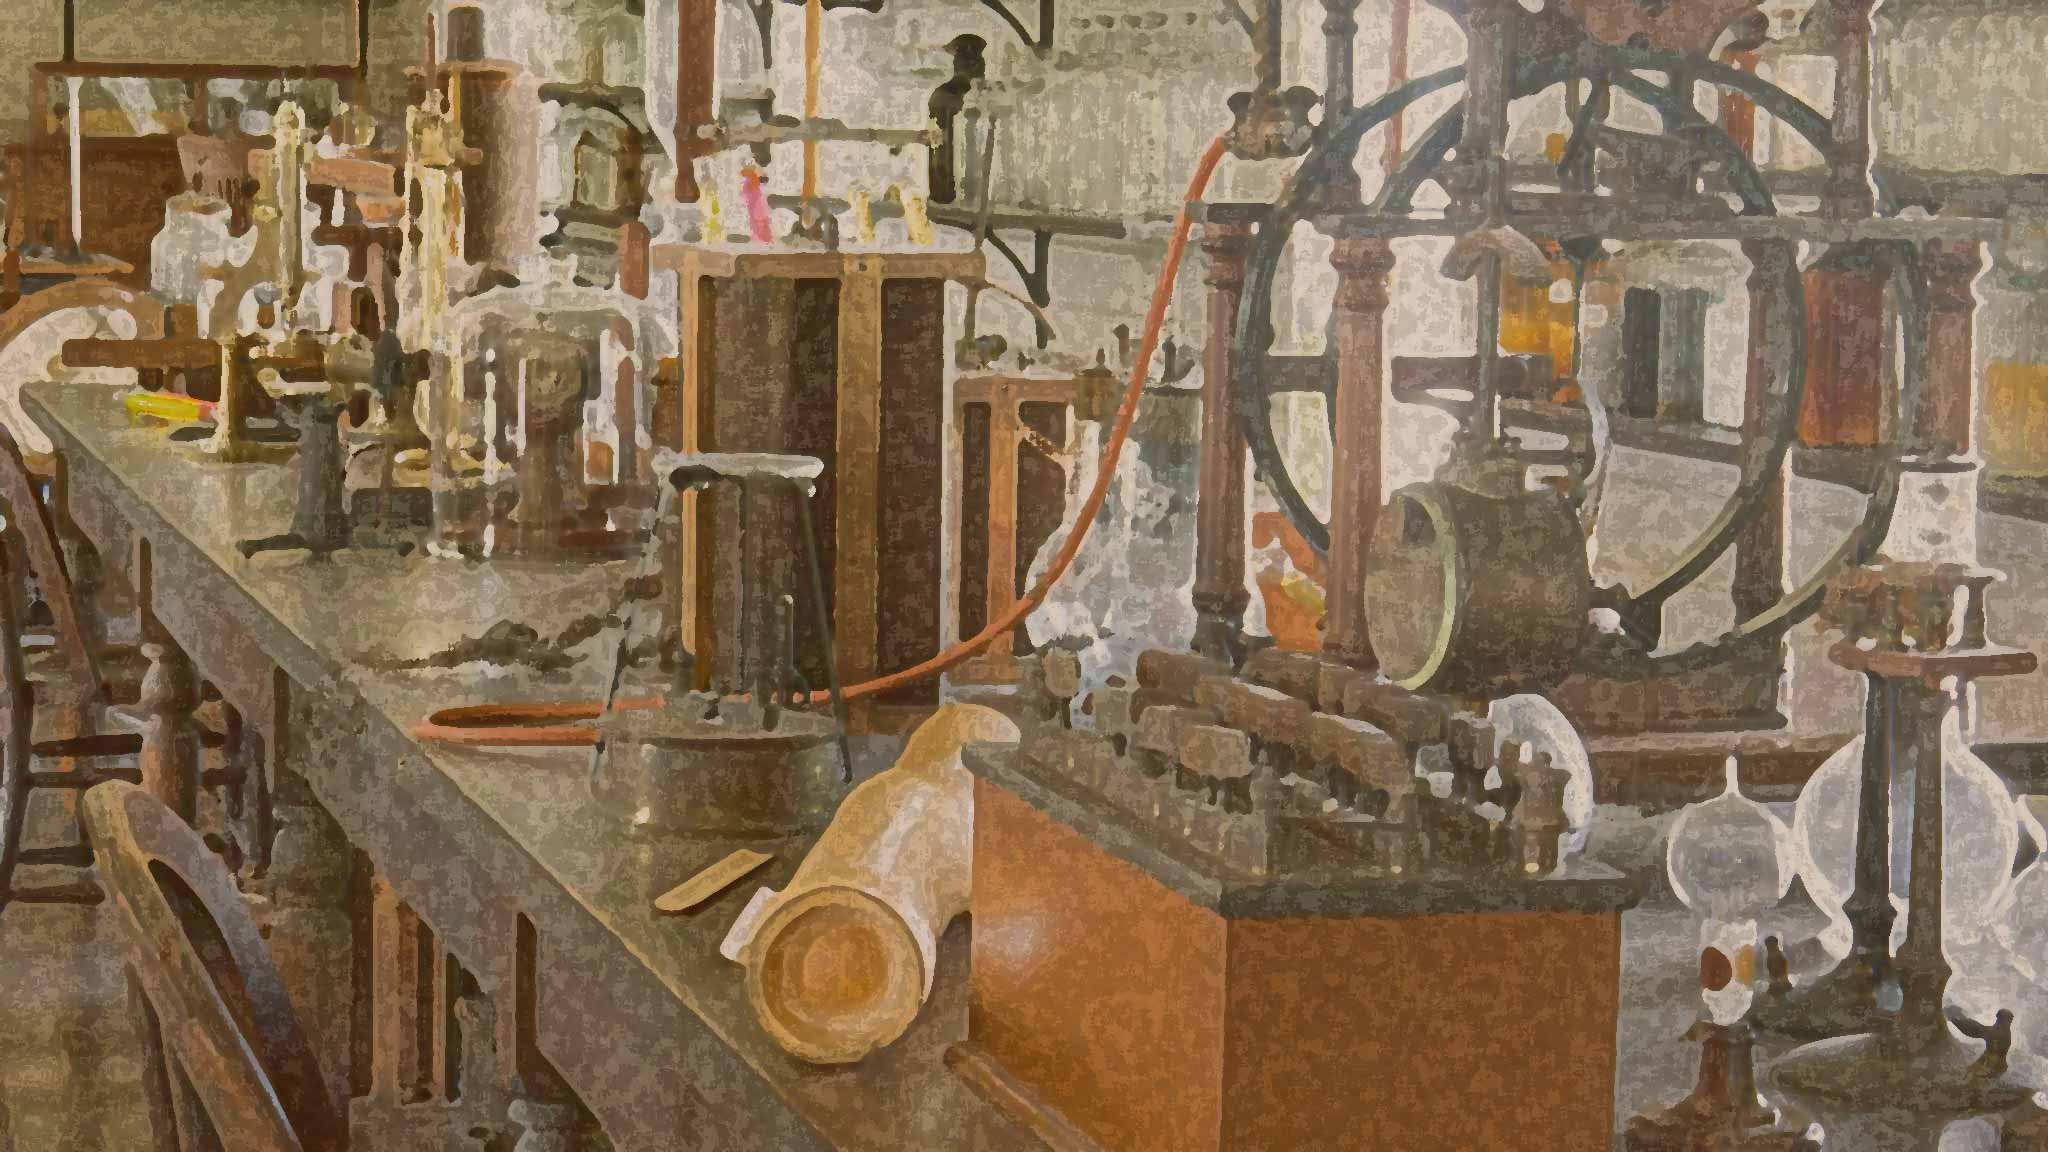 Edison's lab